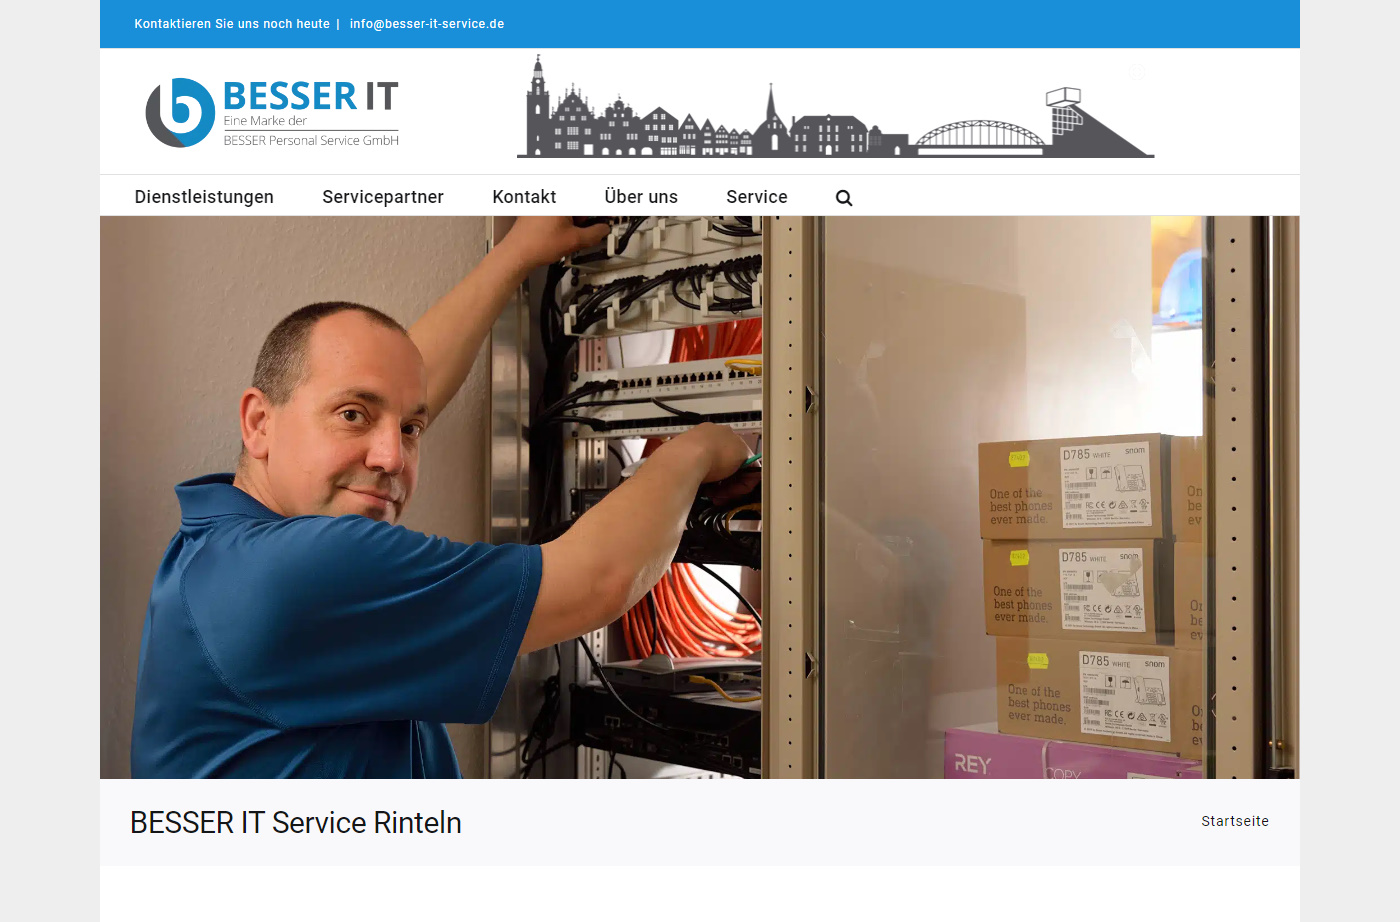 BESSER IT Service Rinteln 1